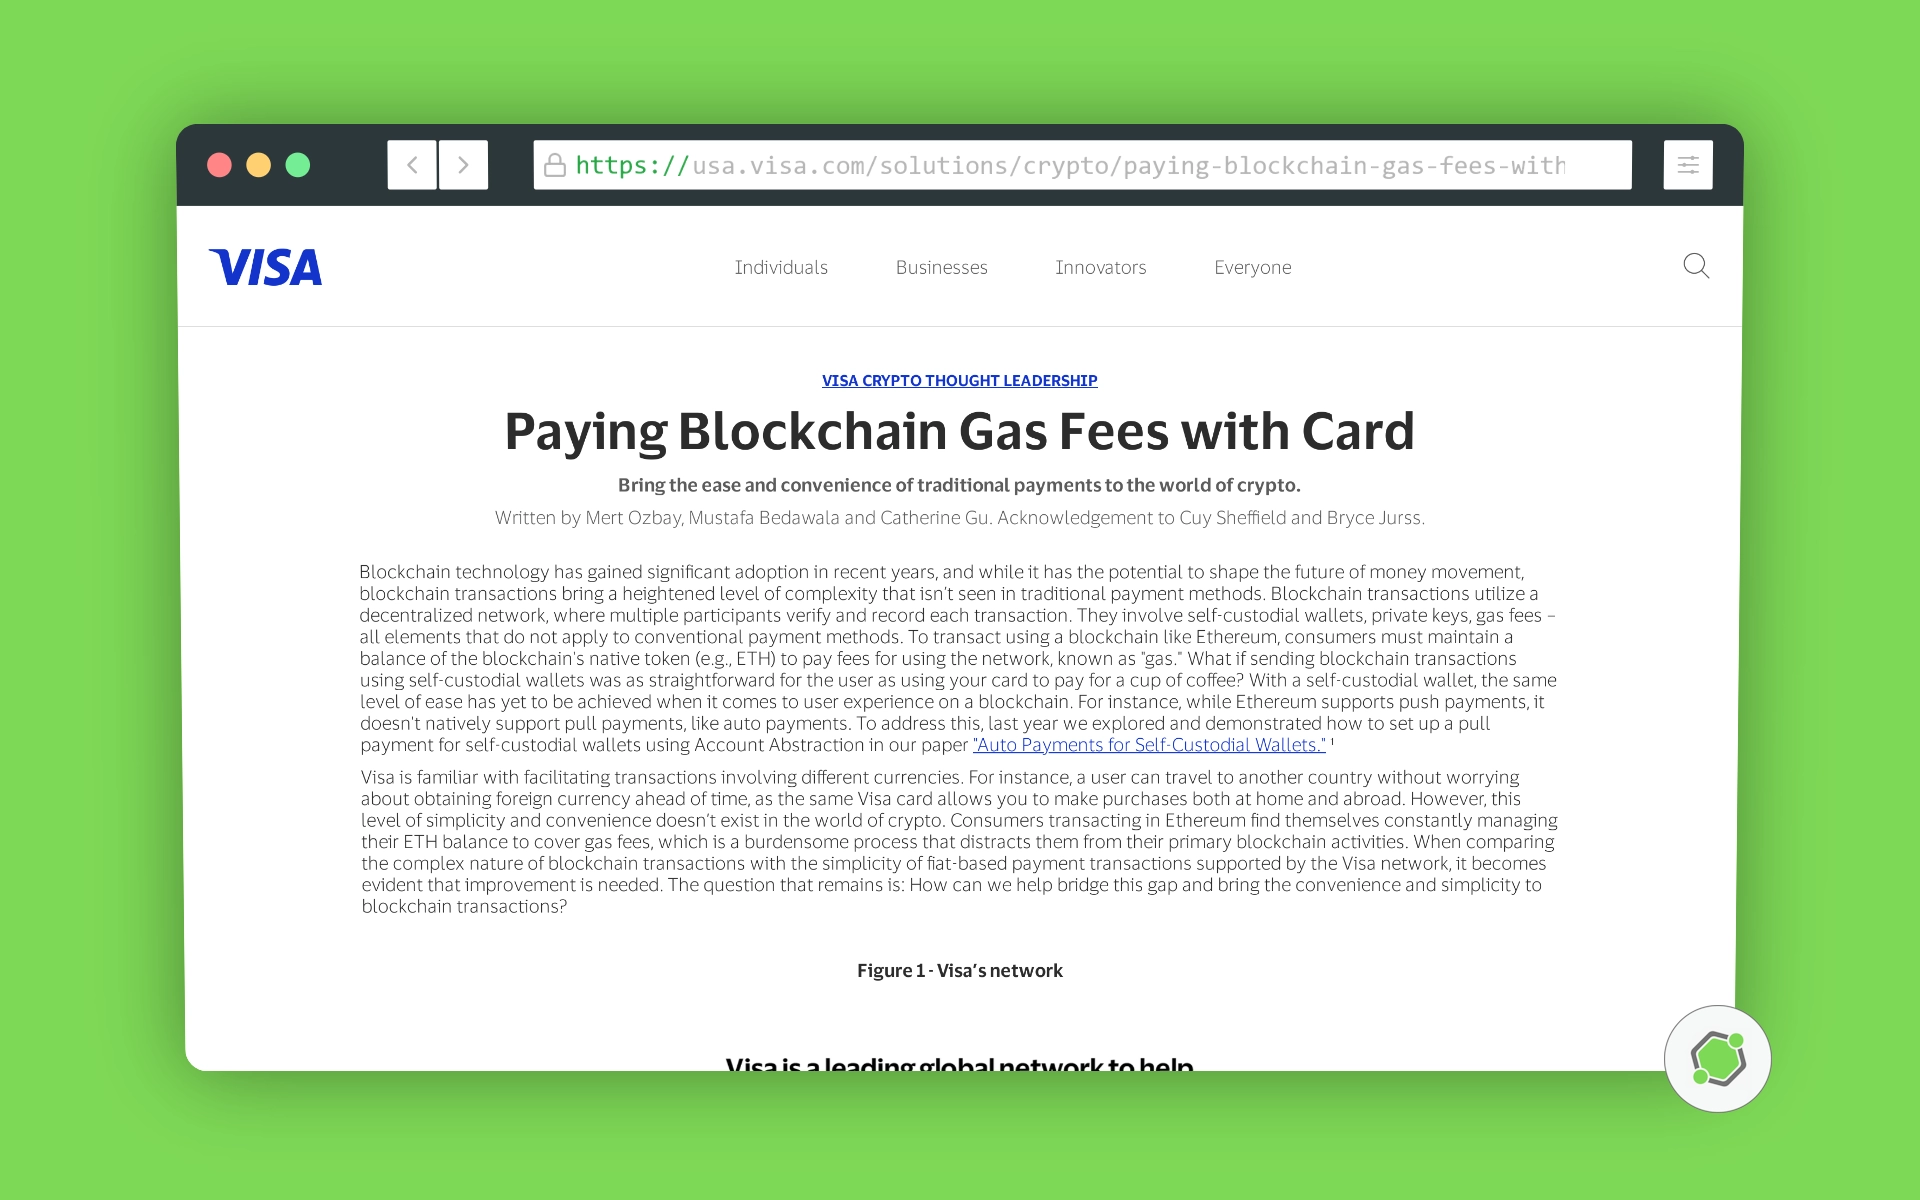 Pago de tarifas de gas blockchain con tarjeta.